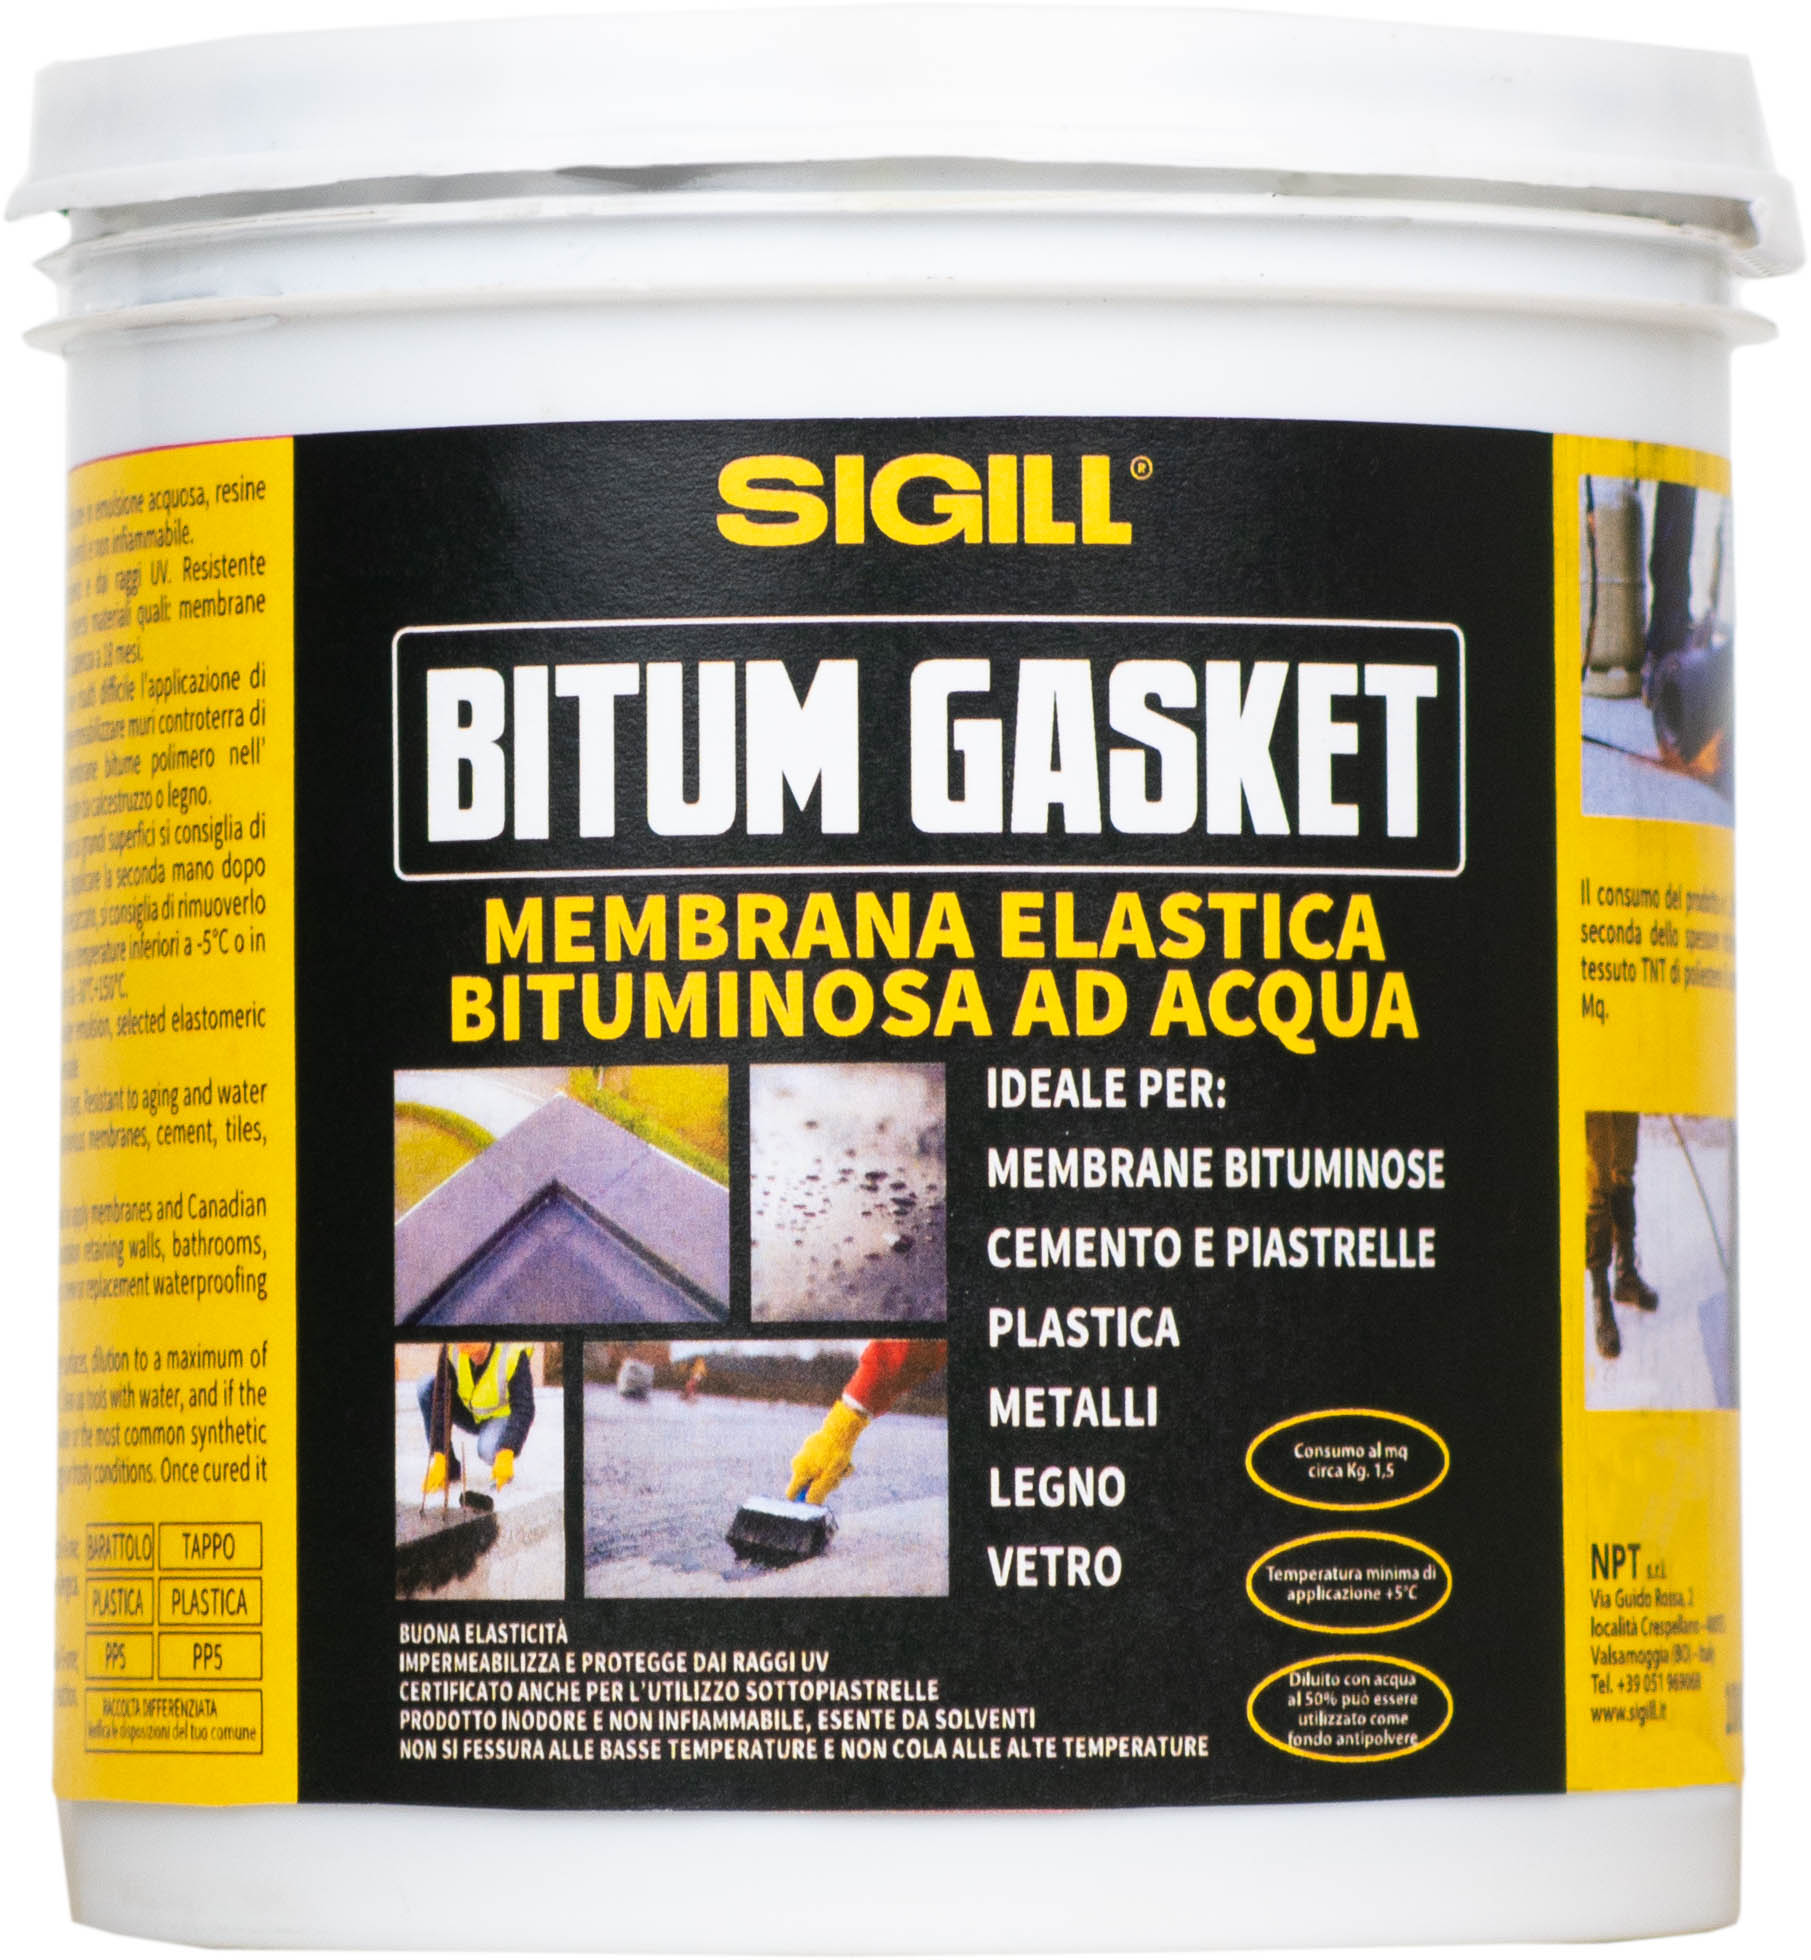 Bitum Gasket Membrana Elastica Barattolo da 1 kg